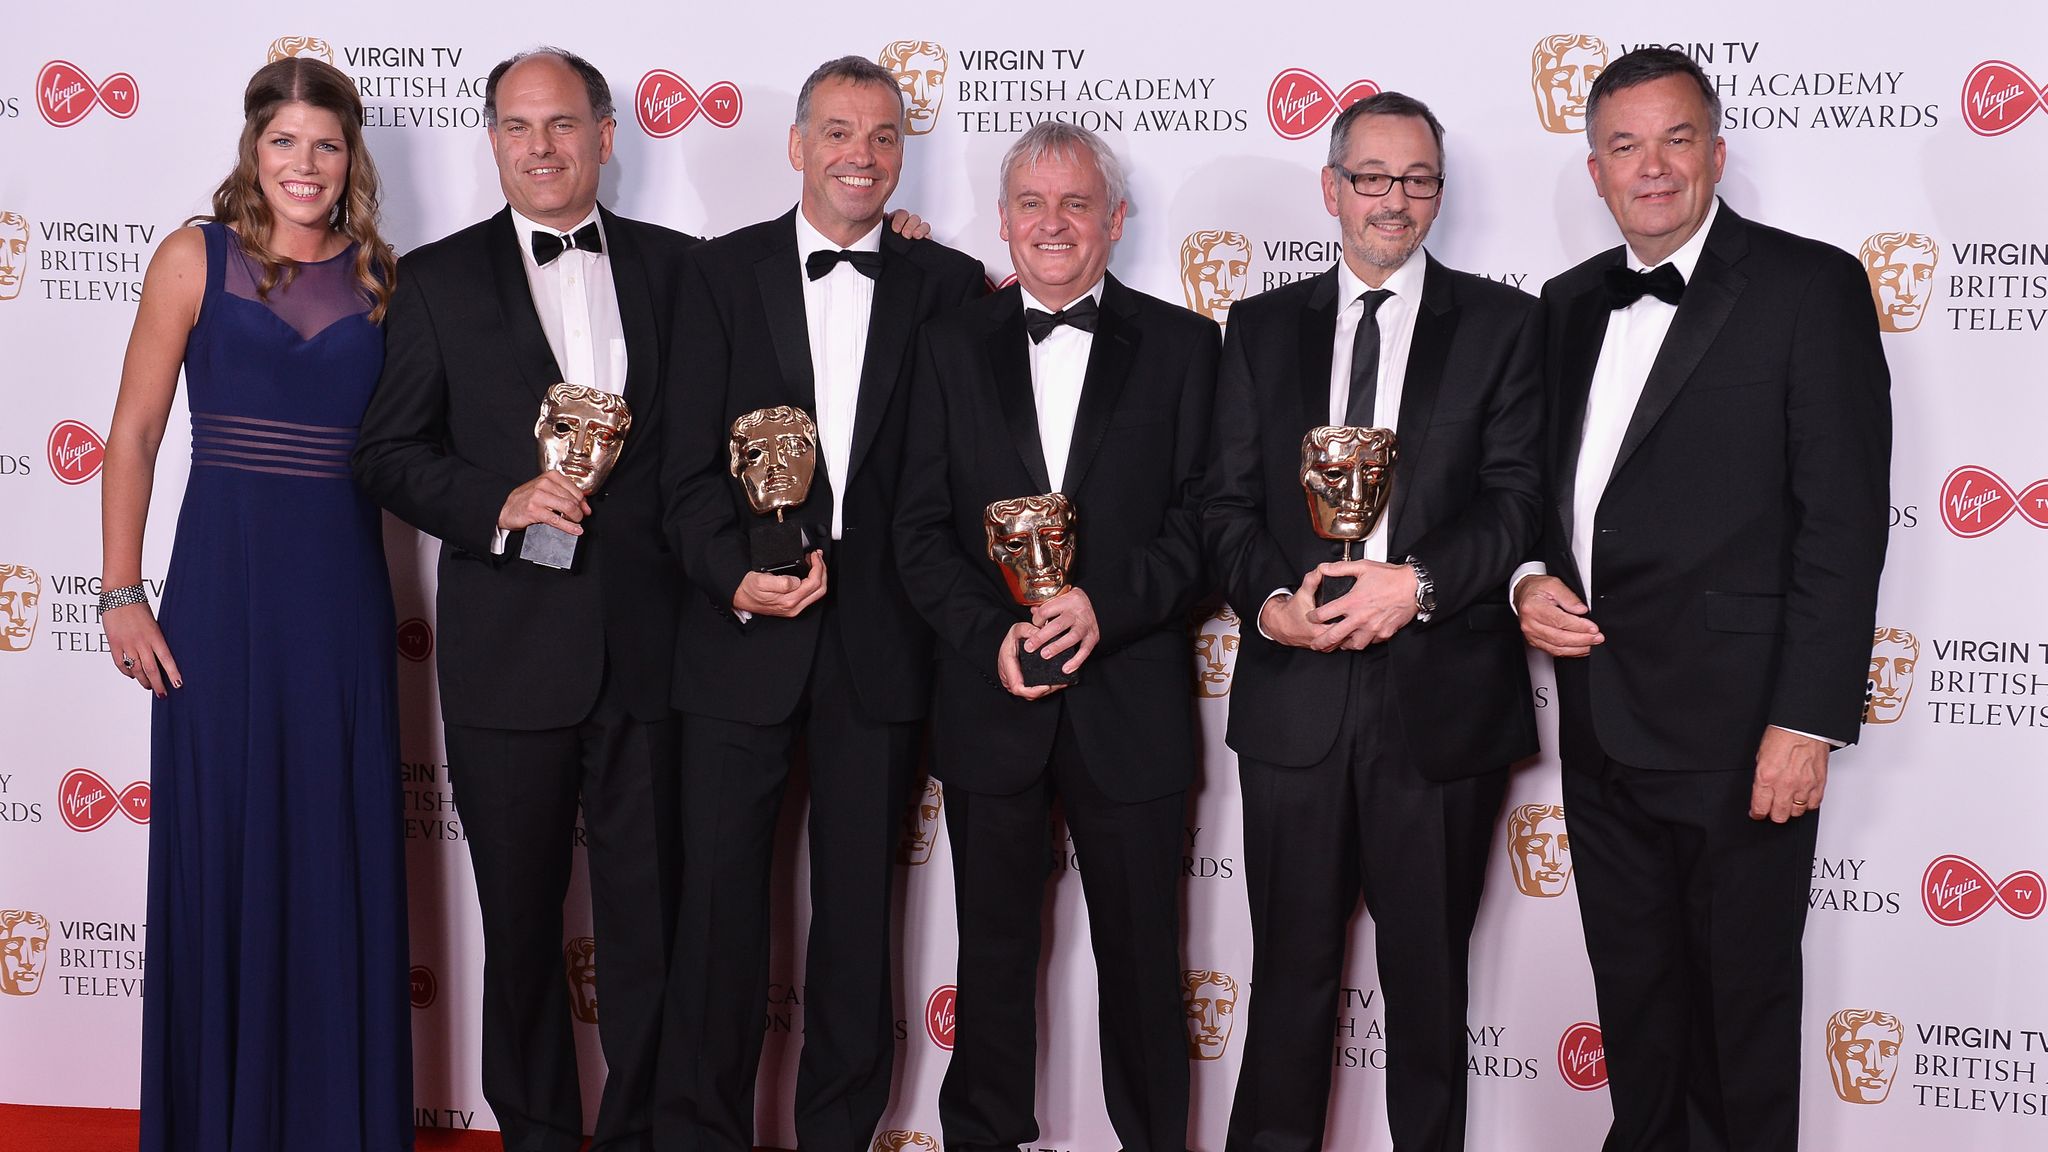 Riot Games receive BAFTA Special Award - Esports News UK